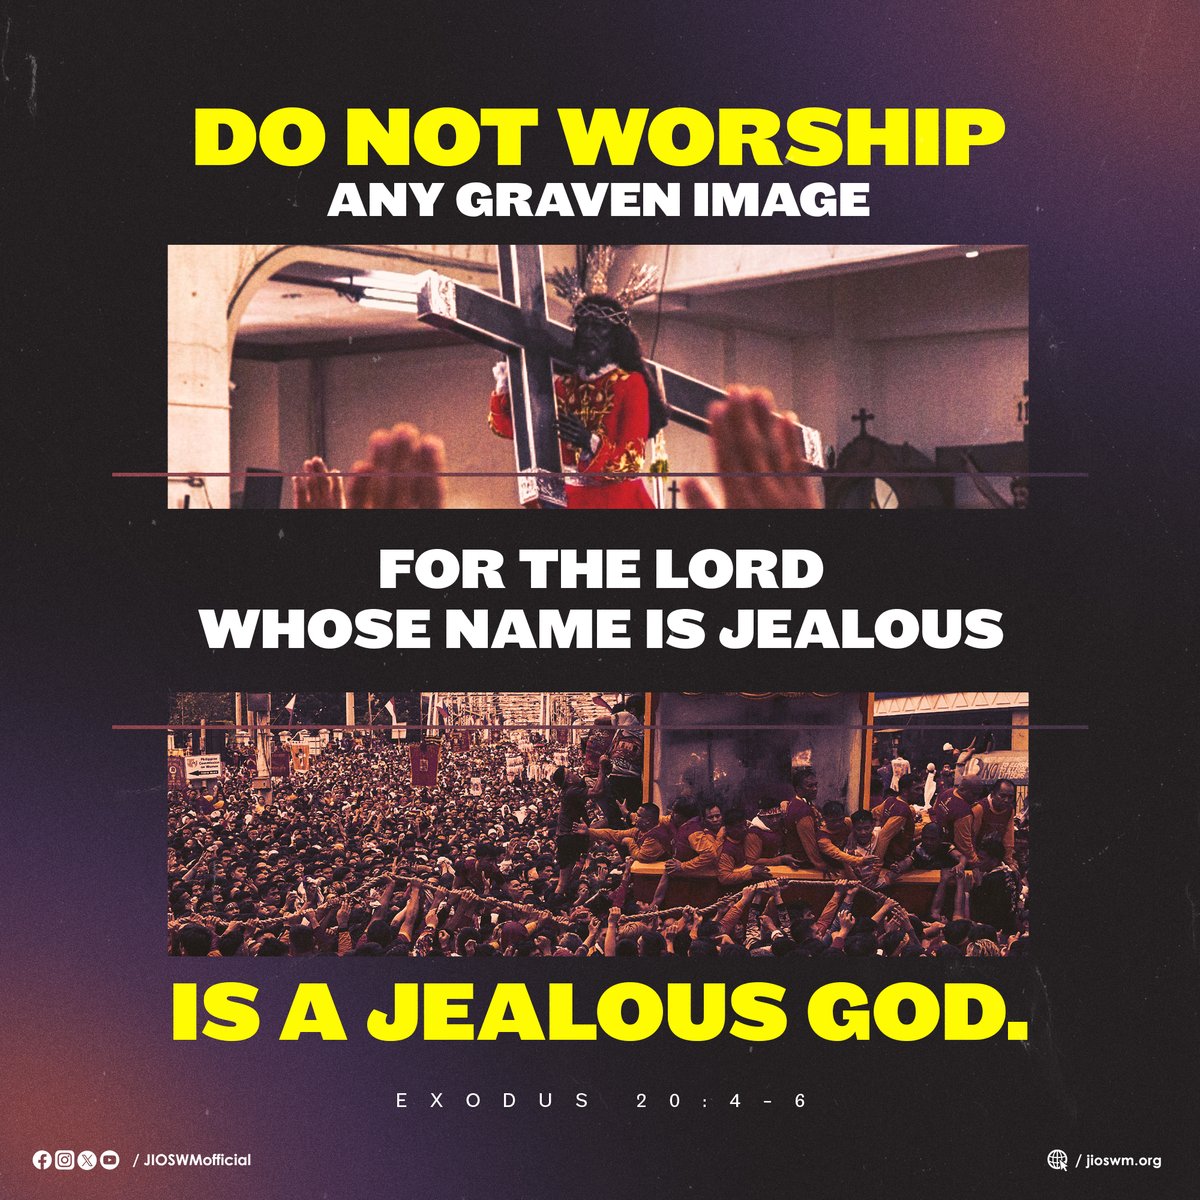 Do not worship any graven image for the Lord, whose name is Jealous, is a jealous God.
- Exodus 20:4-6

#LivingLikeJesus